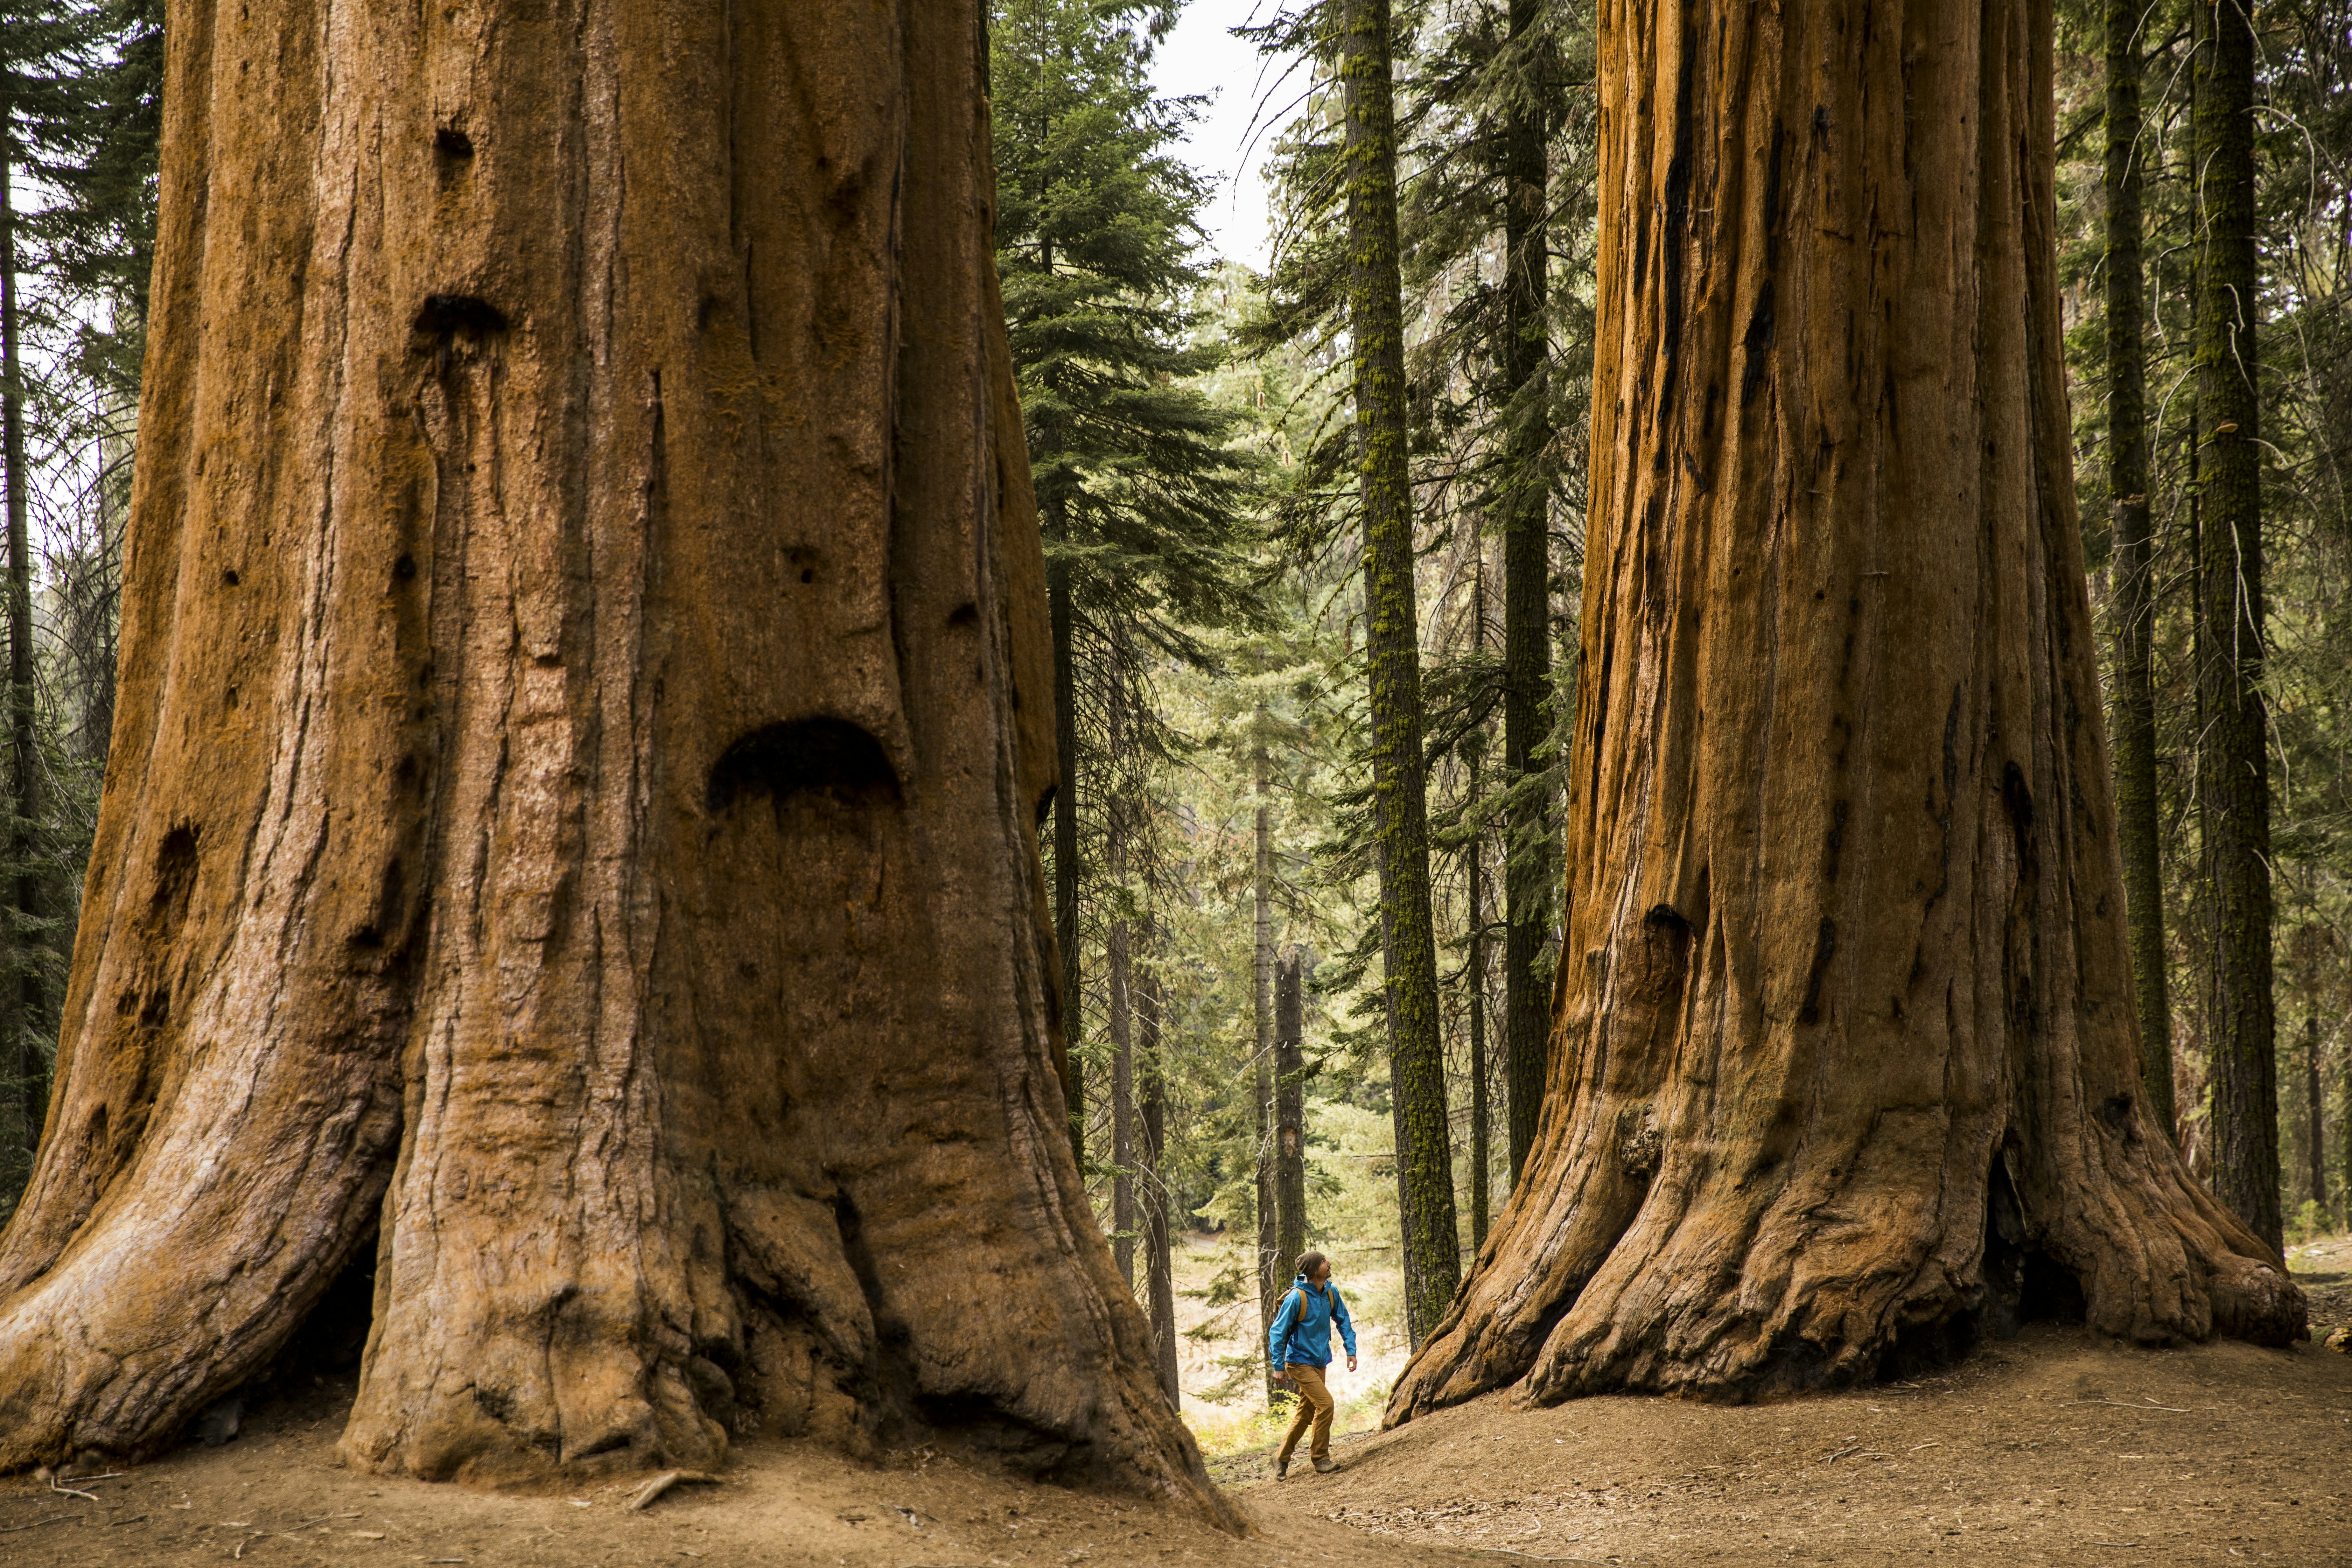 A man hiking beneath giant sequoia trees in California